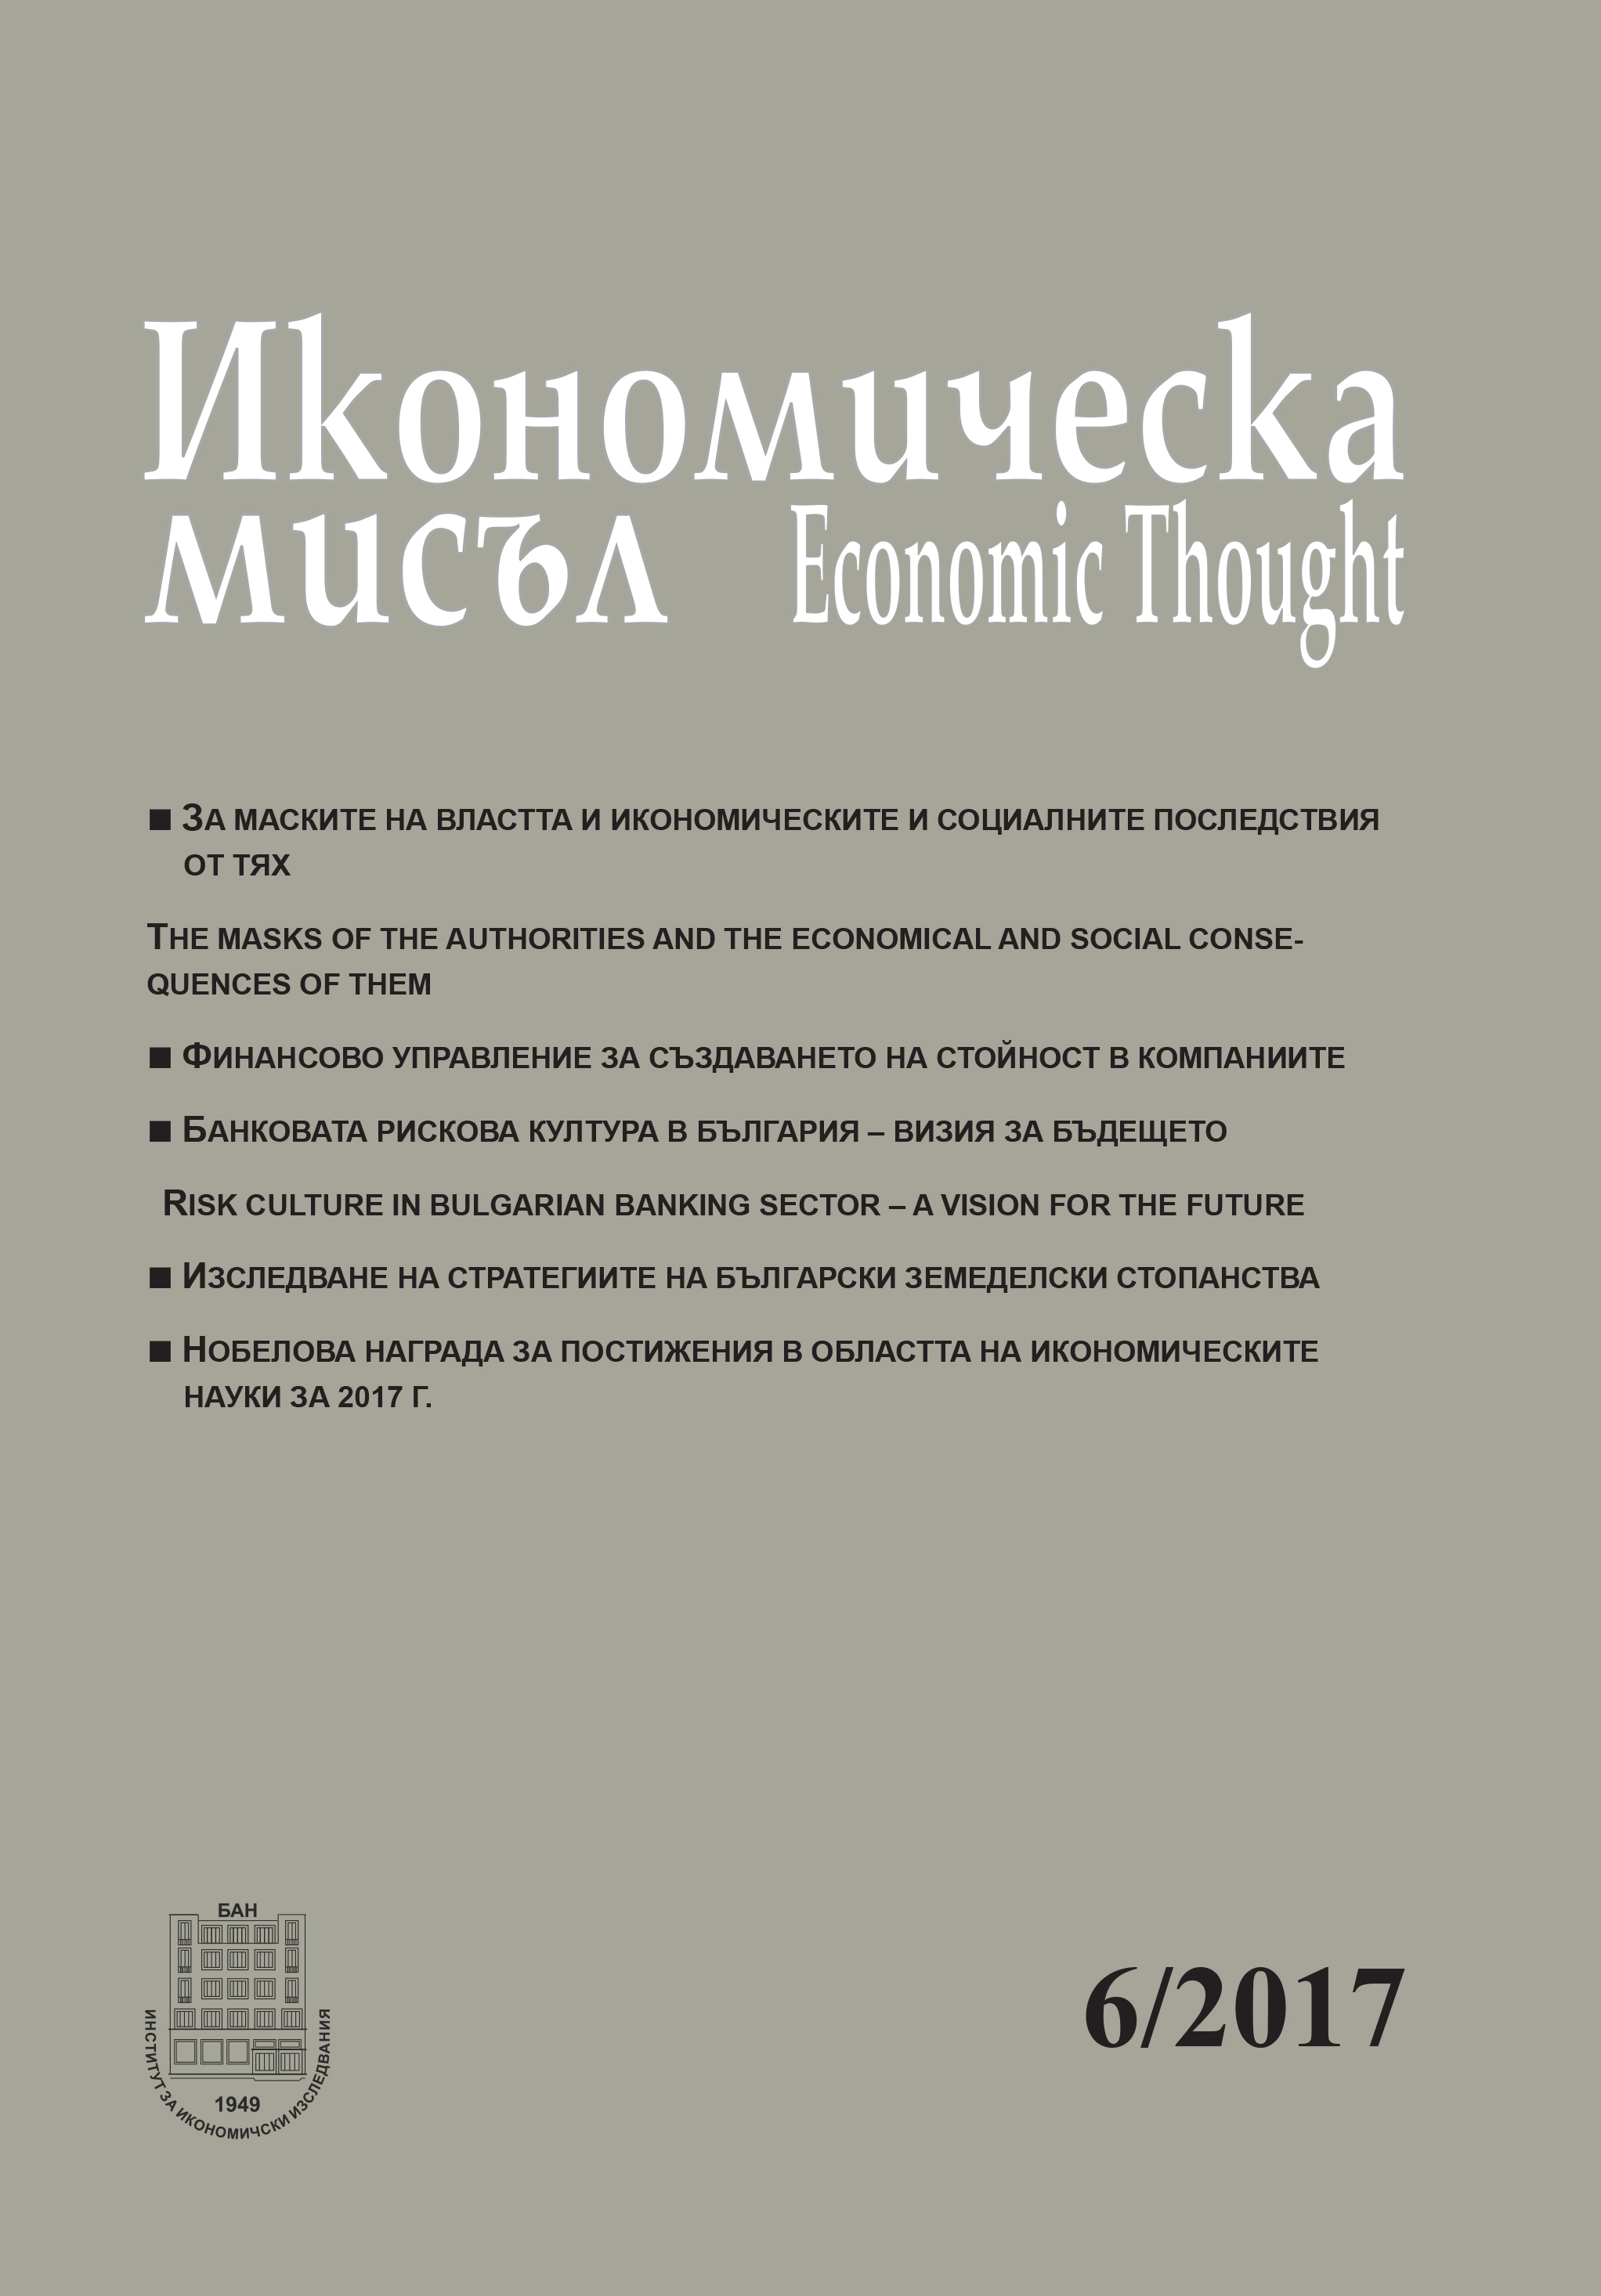 The 2017 Nobel Prize in Economics Cover Image